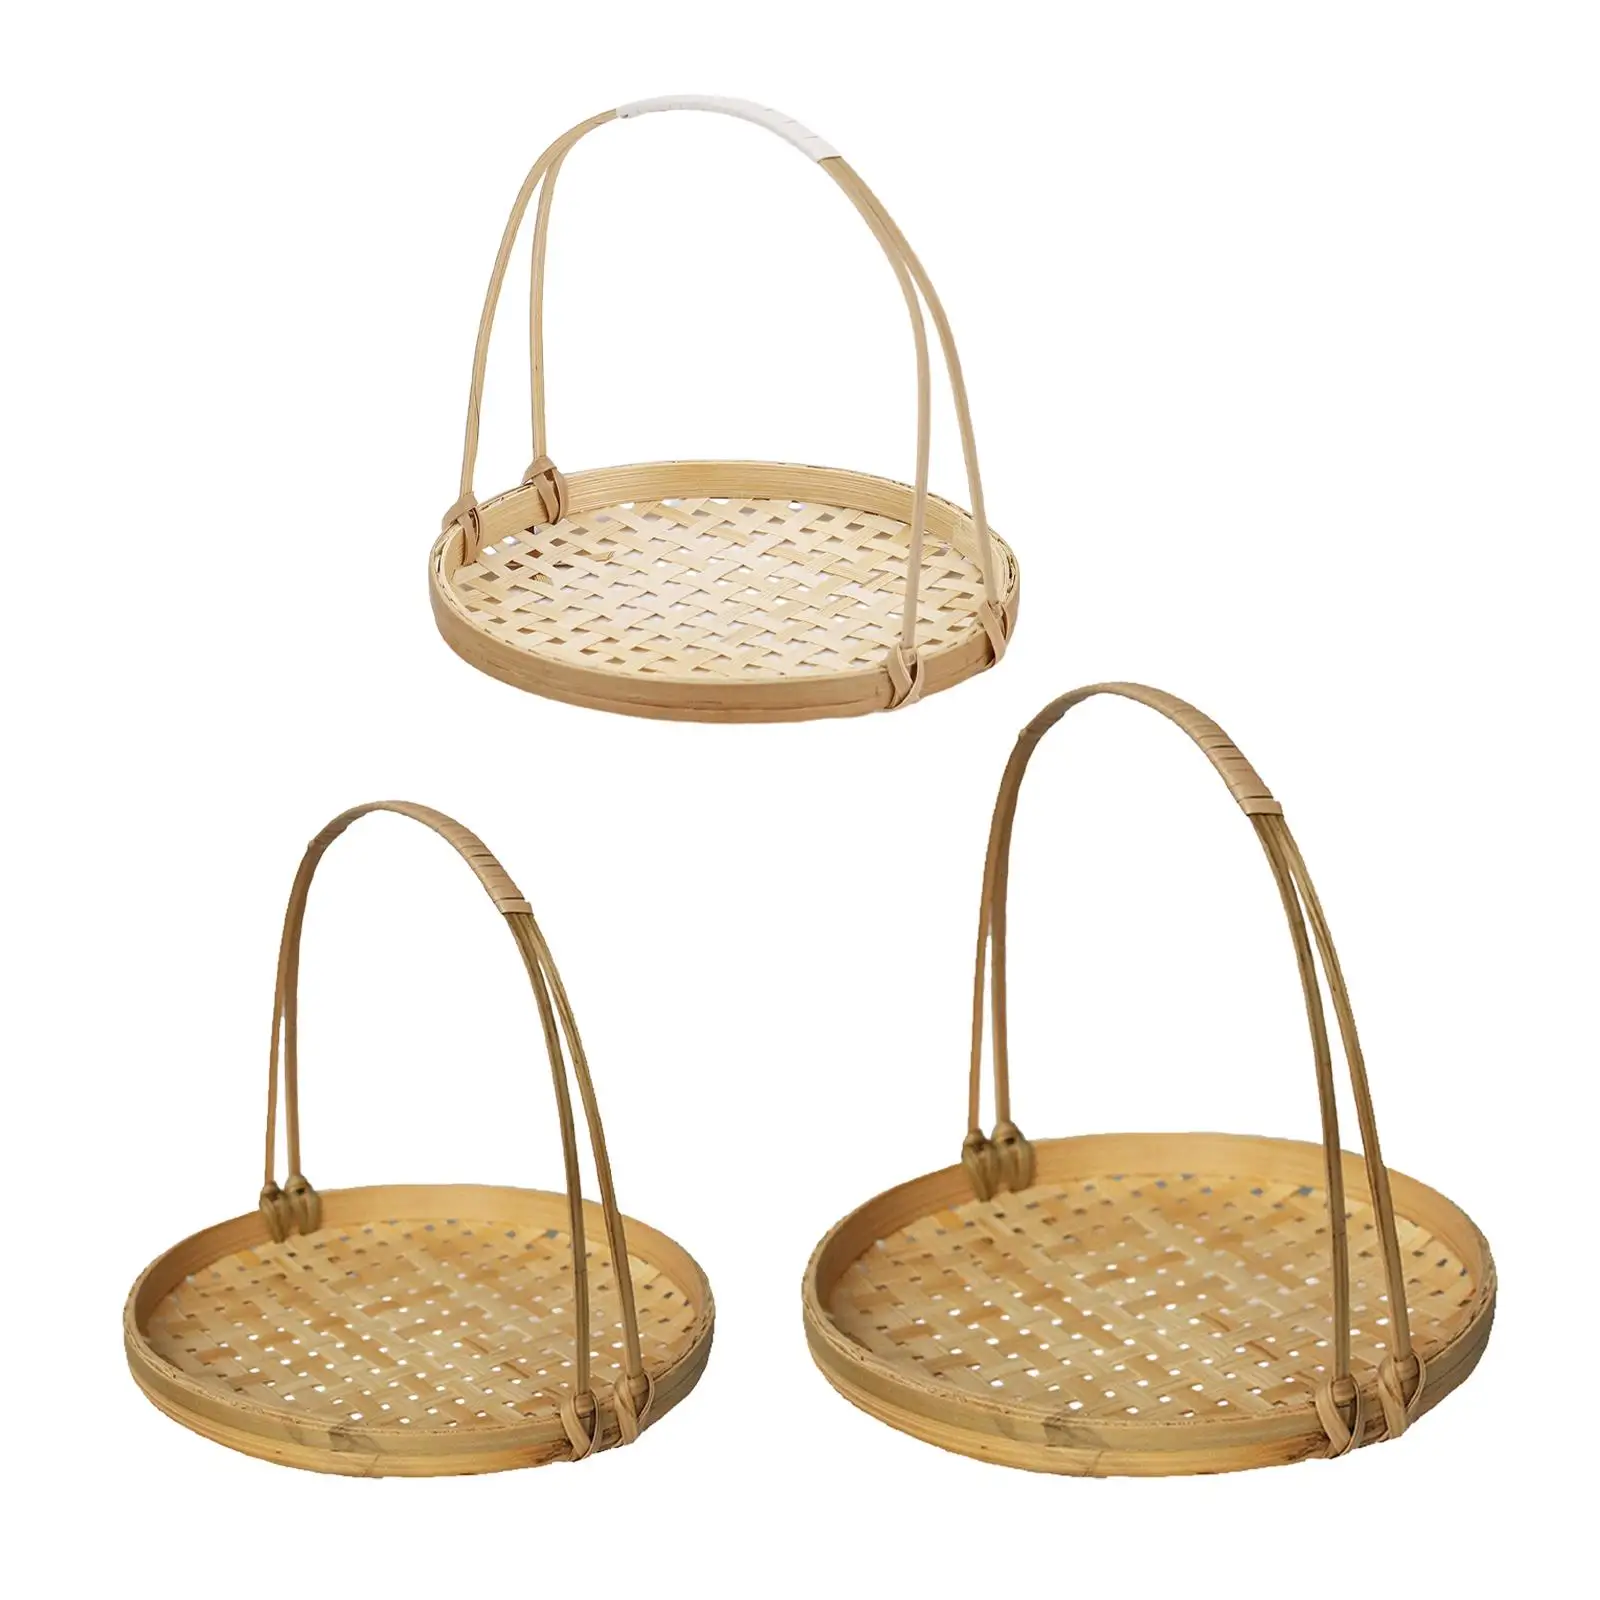 Woven Fruit Basket Rattan with Handles Farmhosue Multipurpose Decorative Rustic Fruit Bowls for Desk Restaurant Living Room